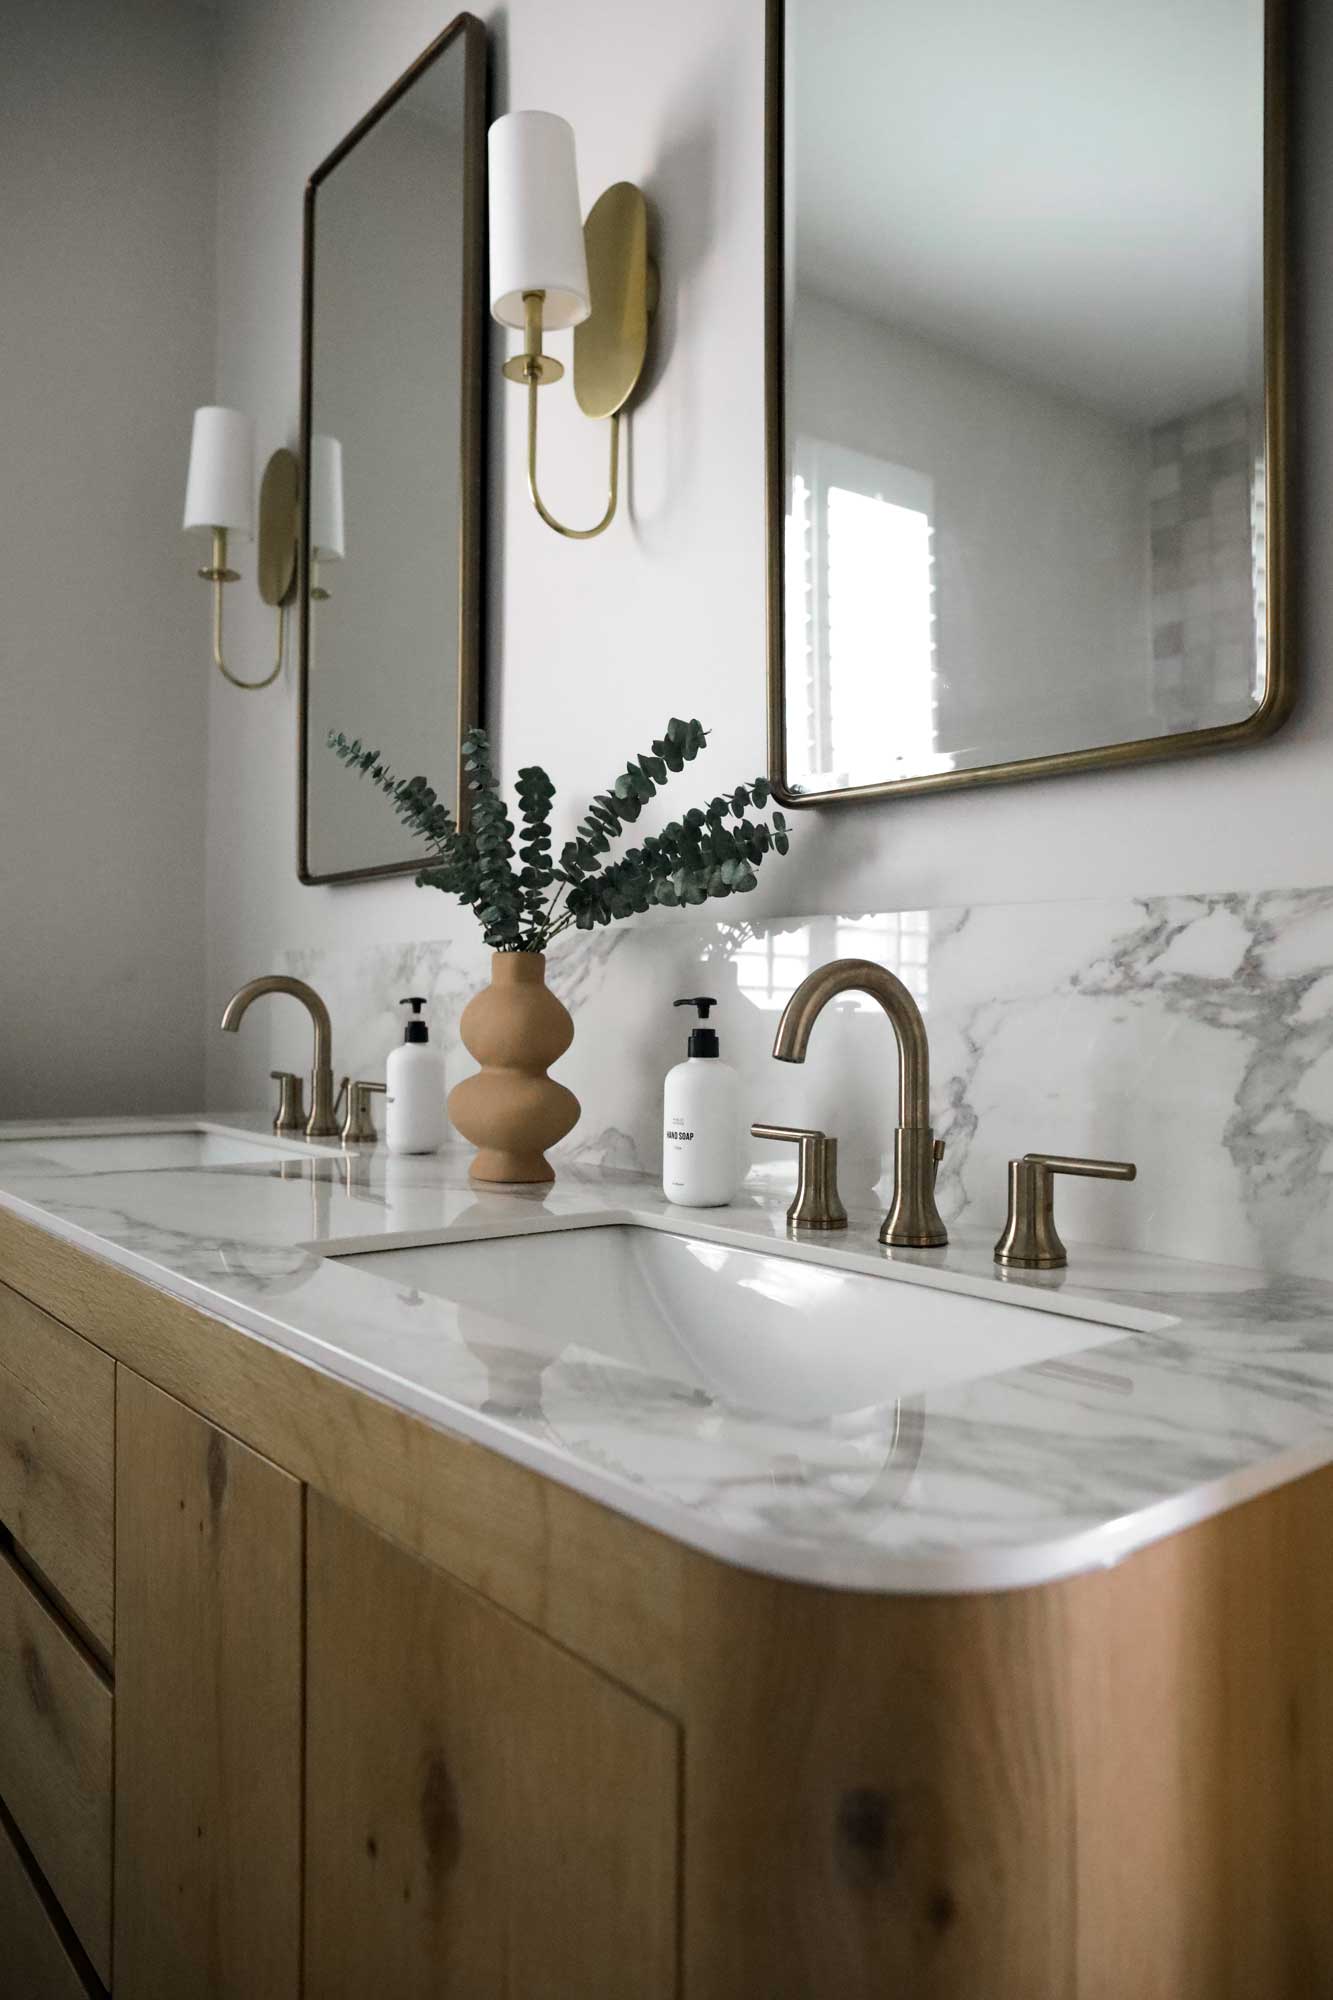 zellige tile bathroom renovation by interior designer Patchi Cancado